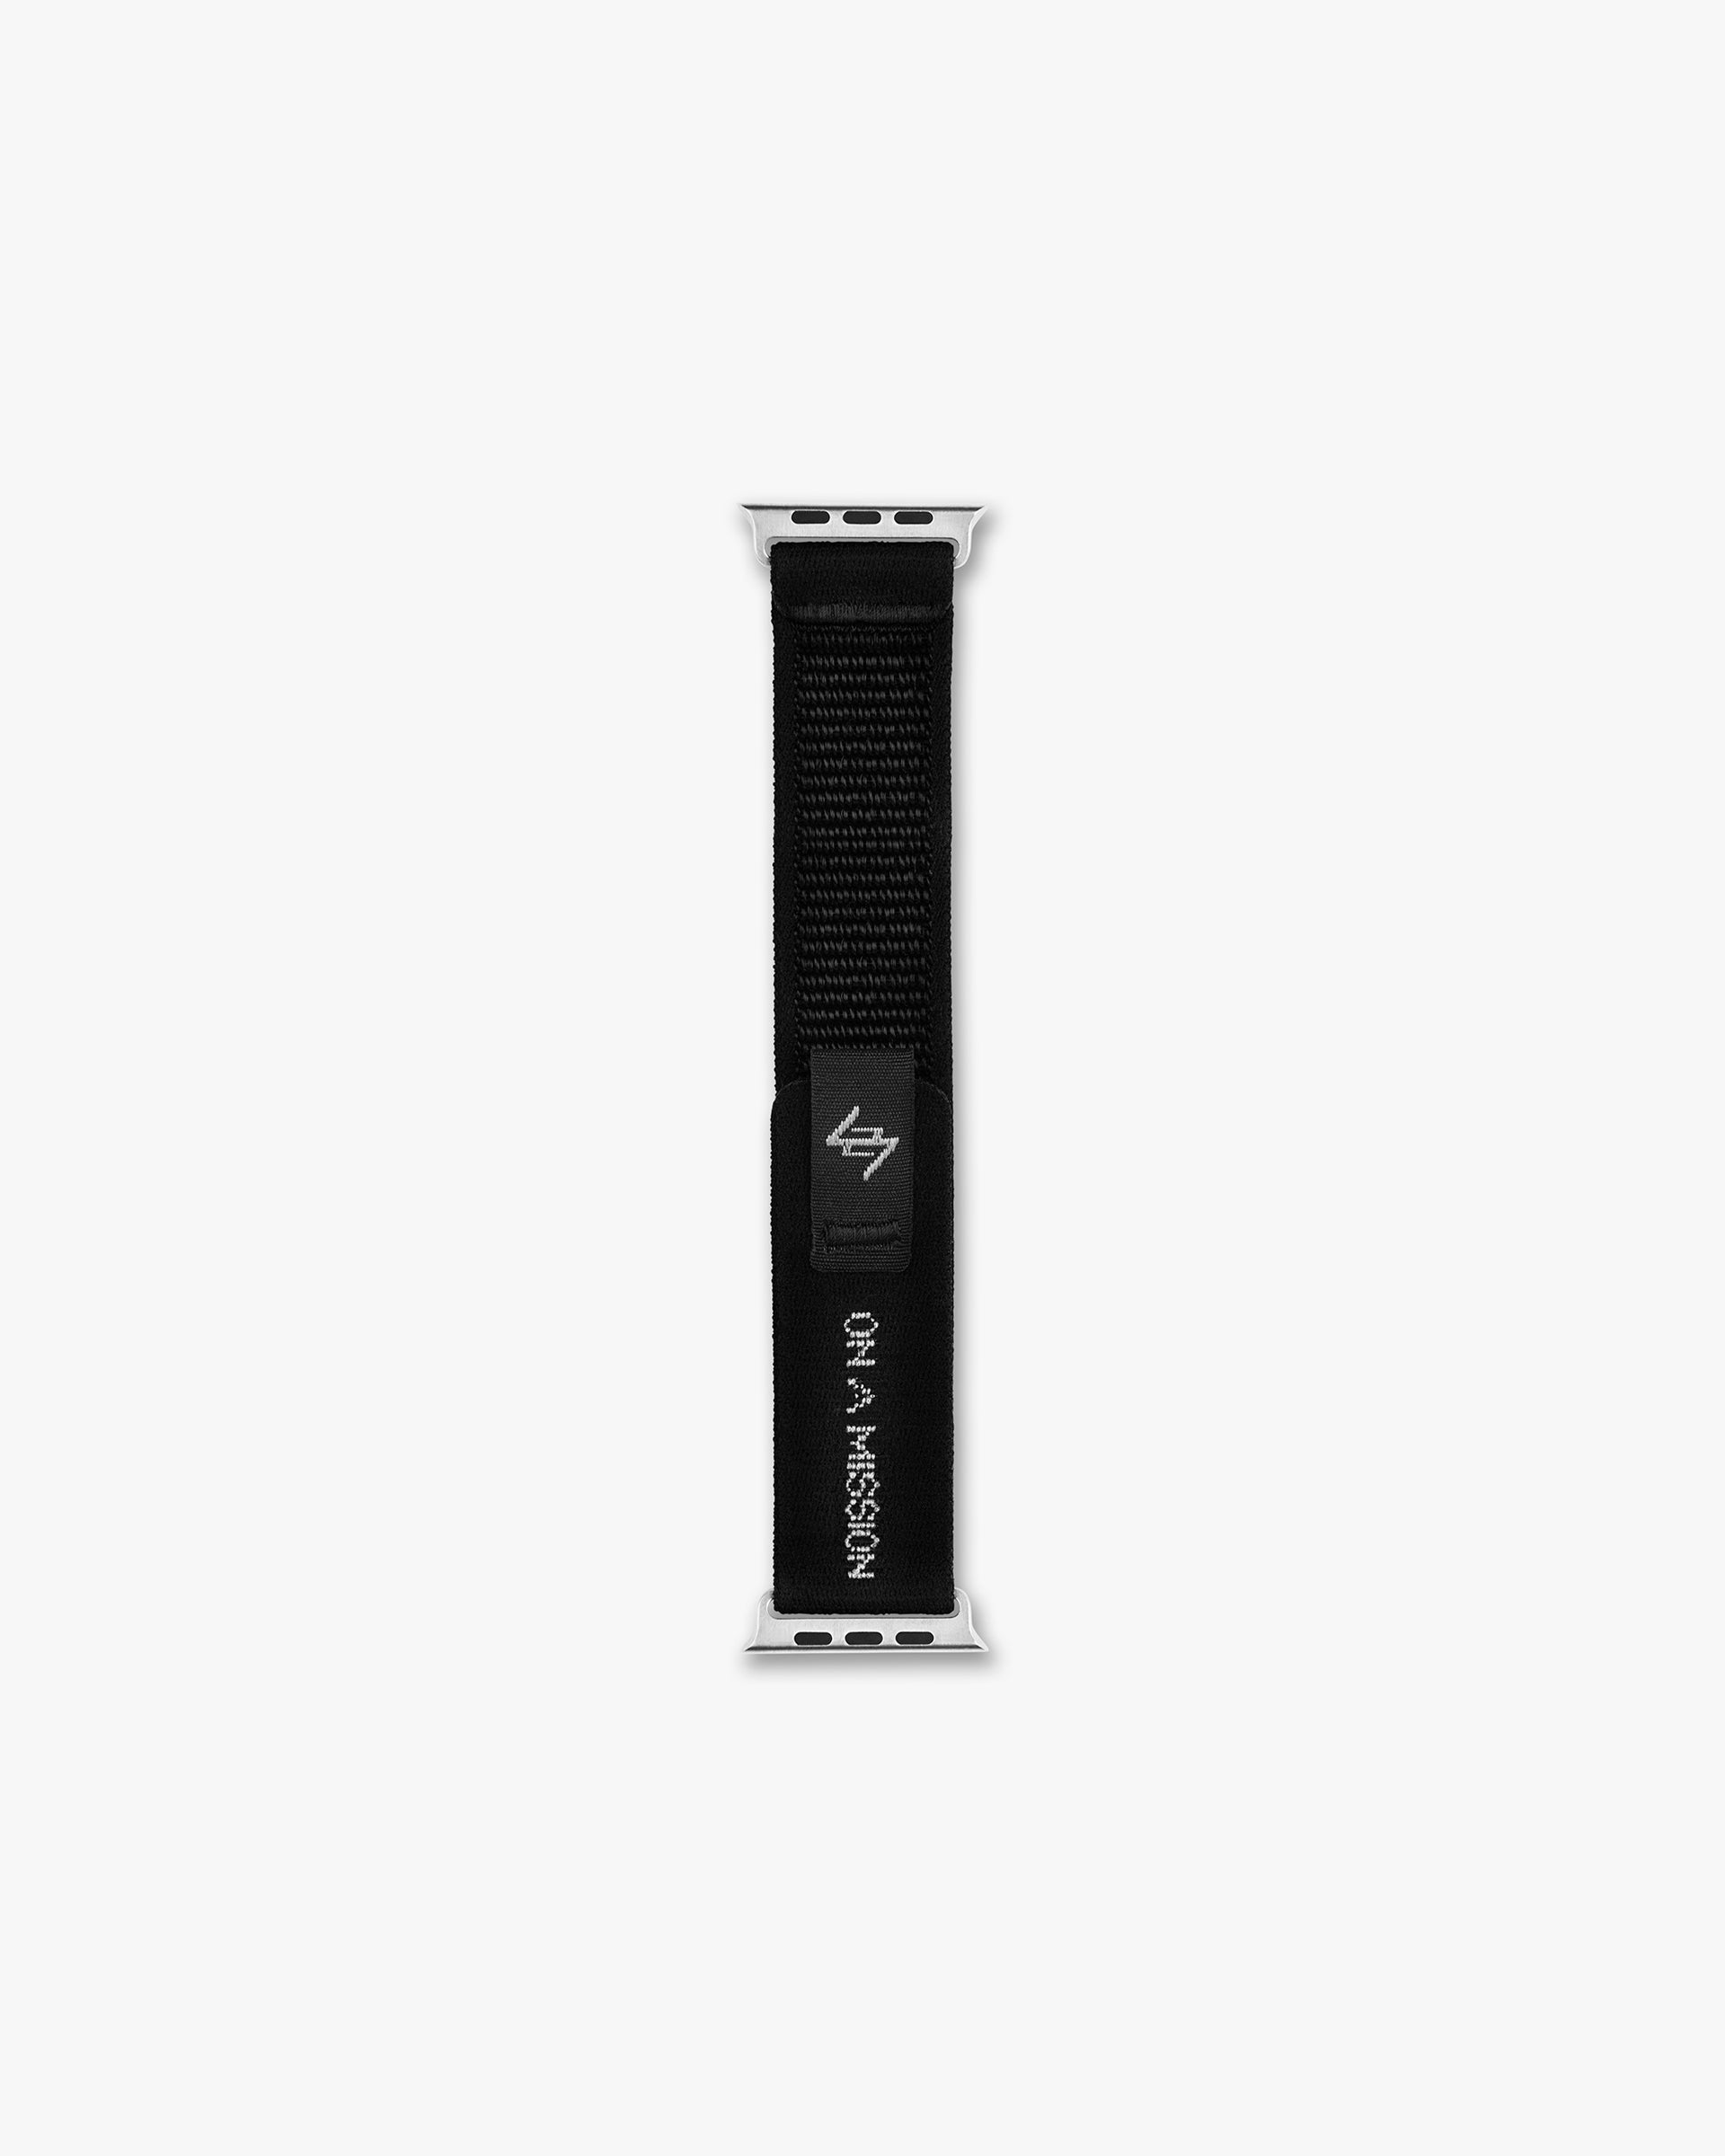 247 Apple Watch Strap - Black